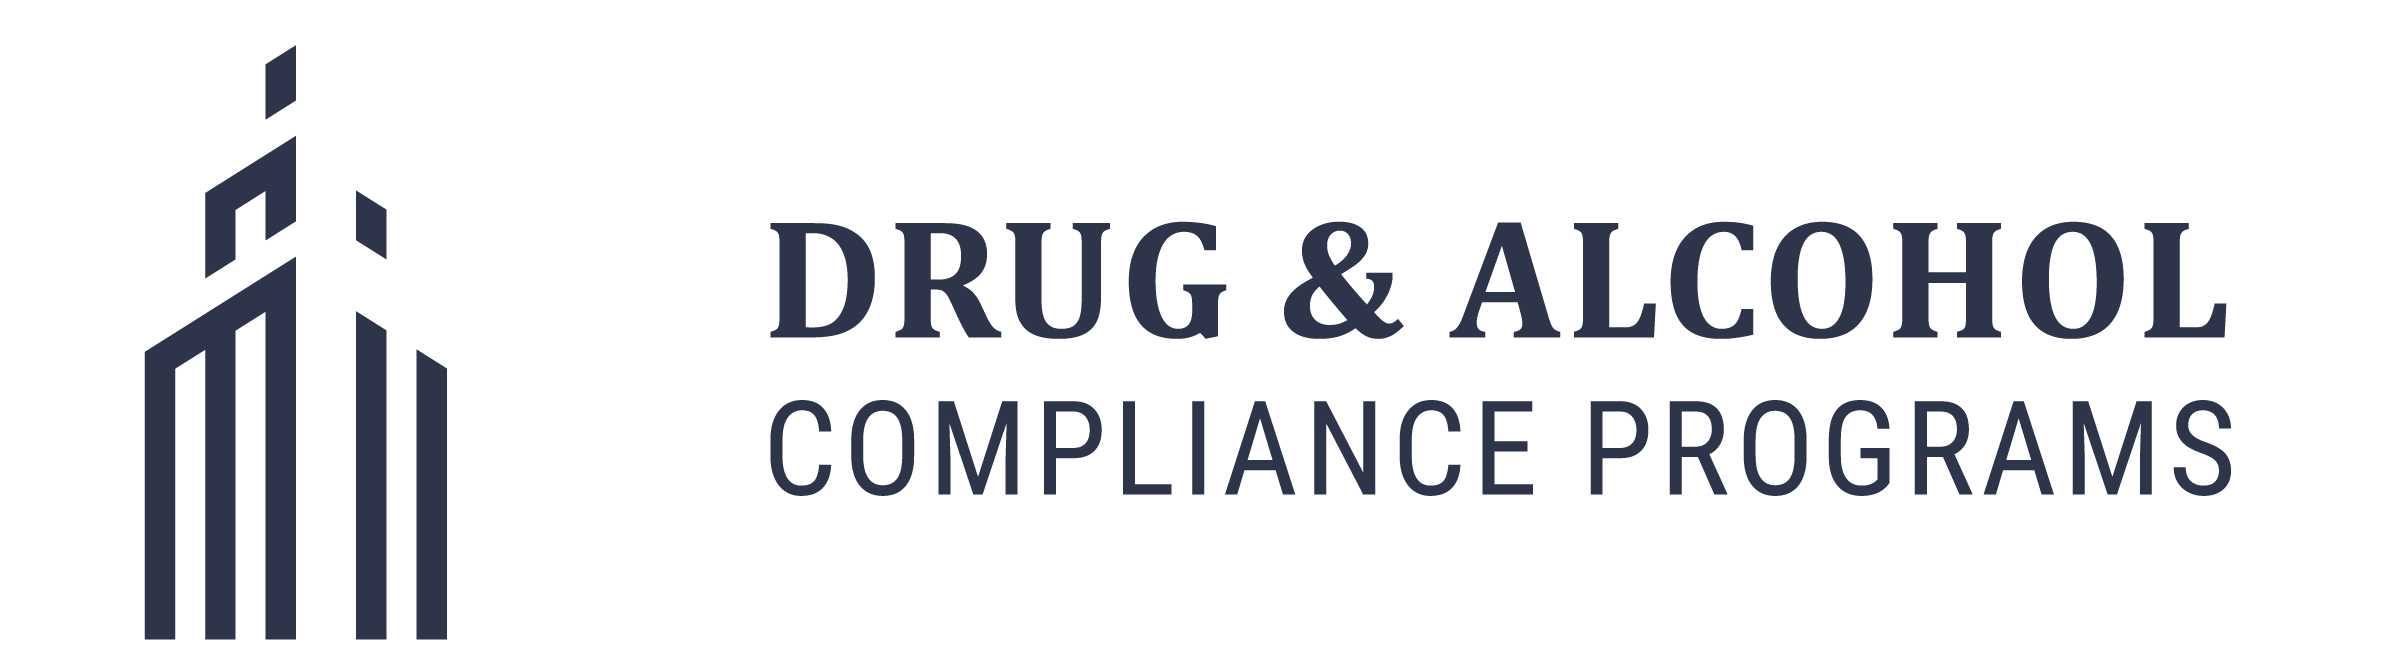 drug & alcohol compliance programs